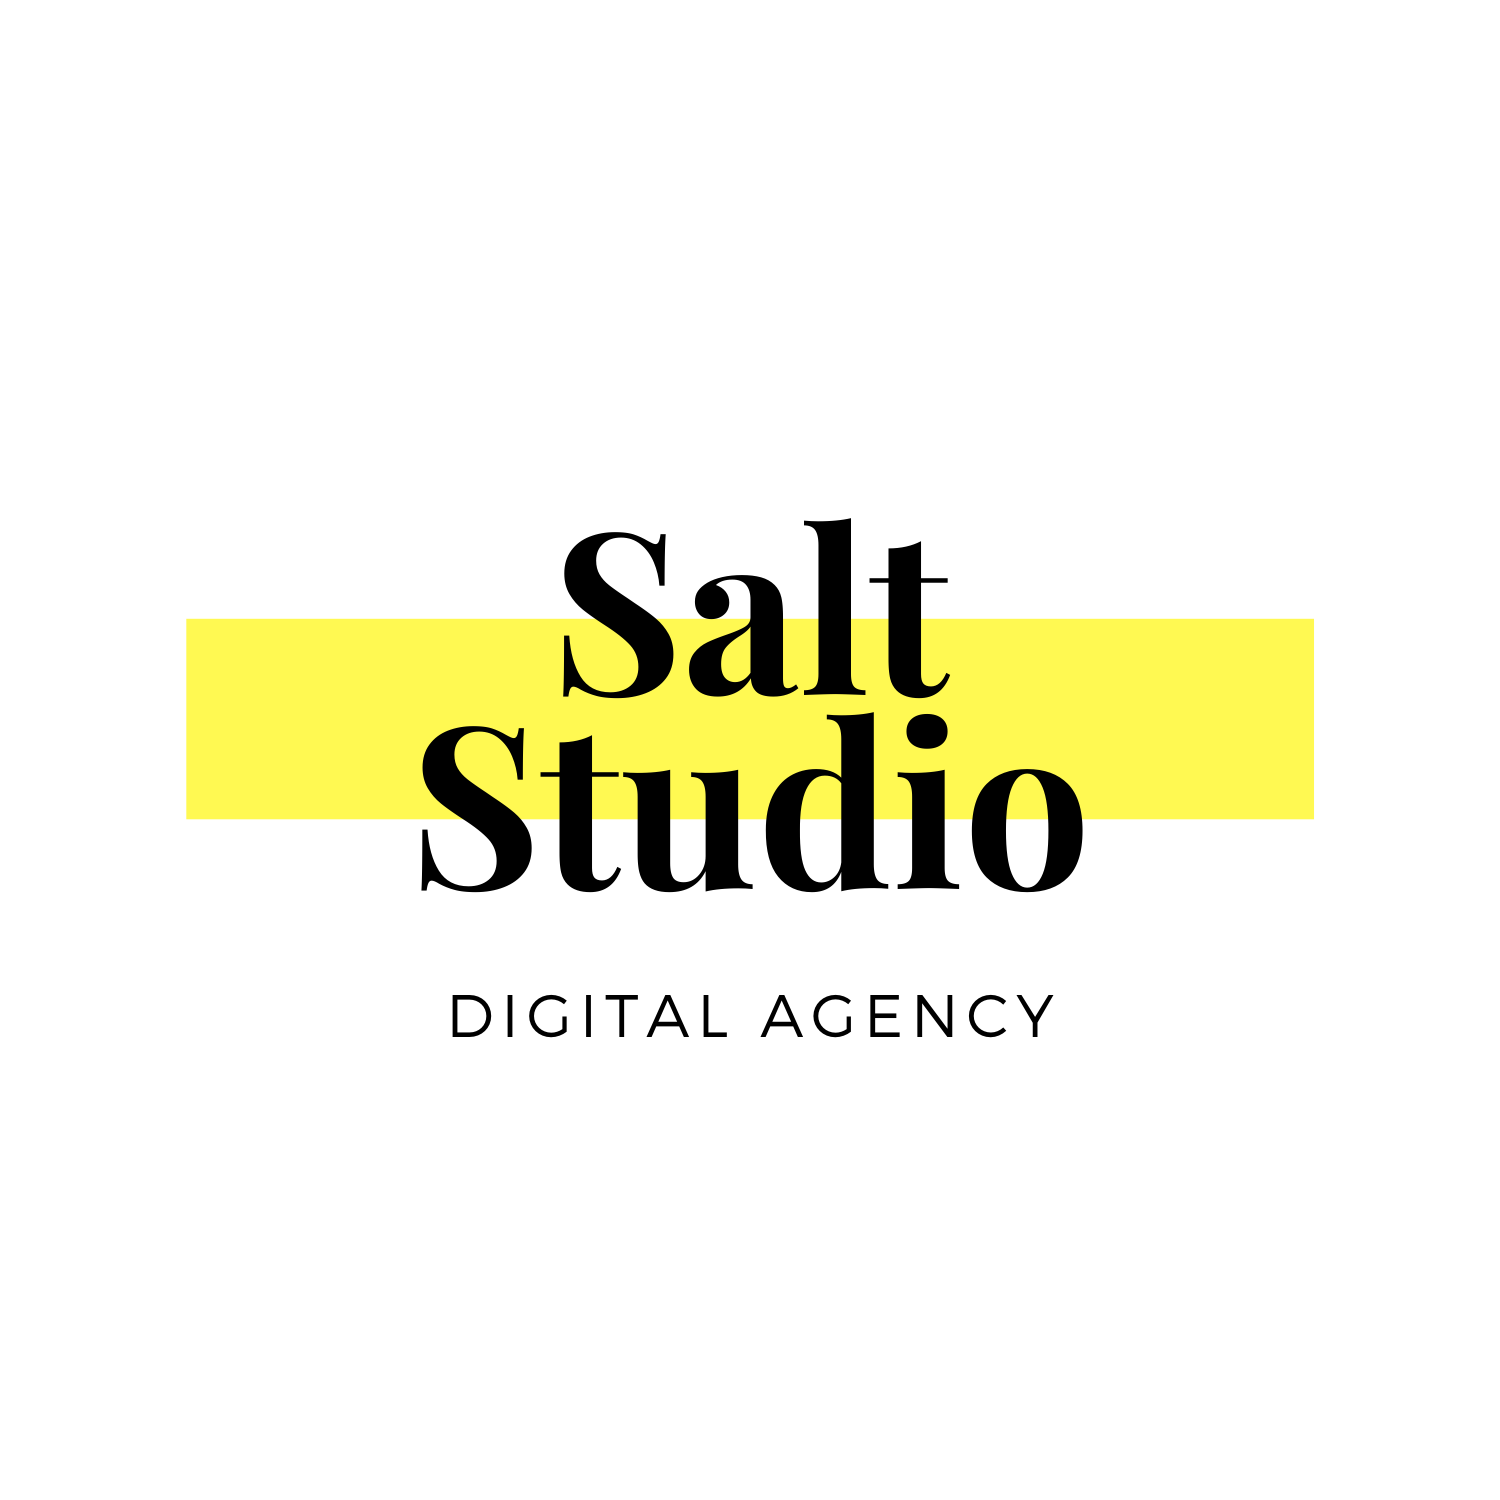 Salt Studio Digital